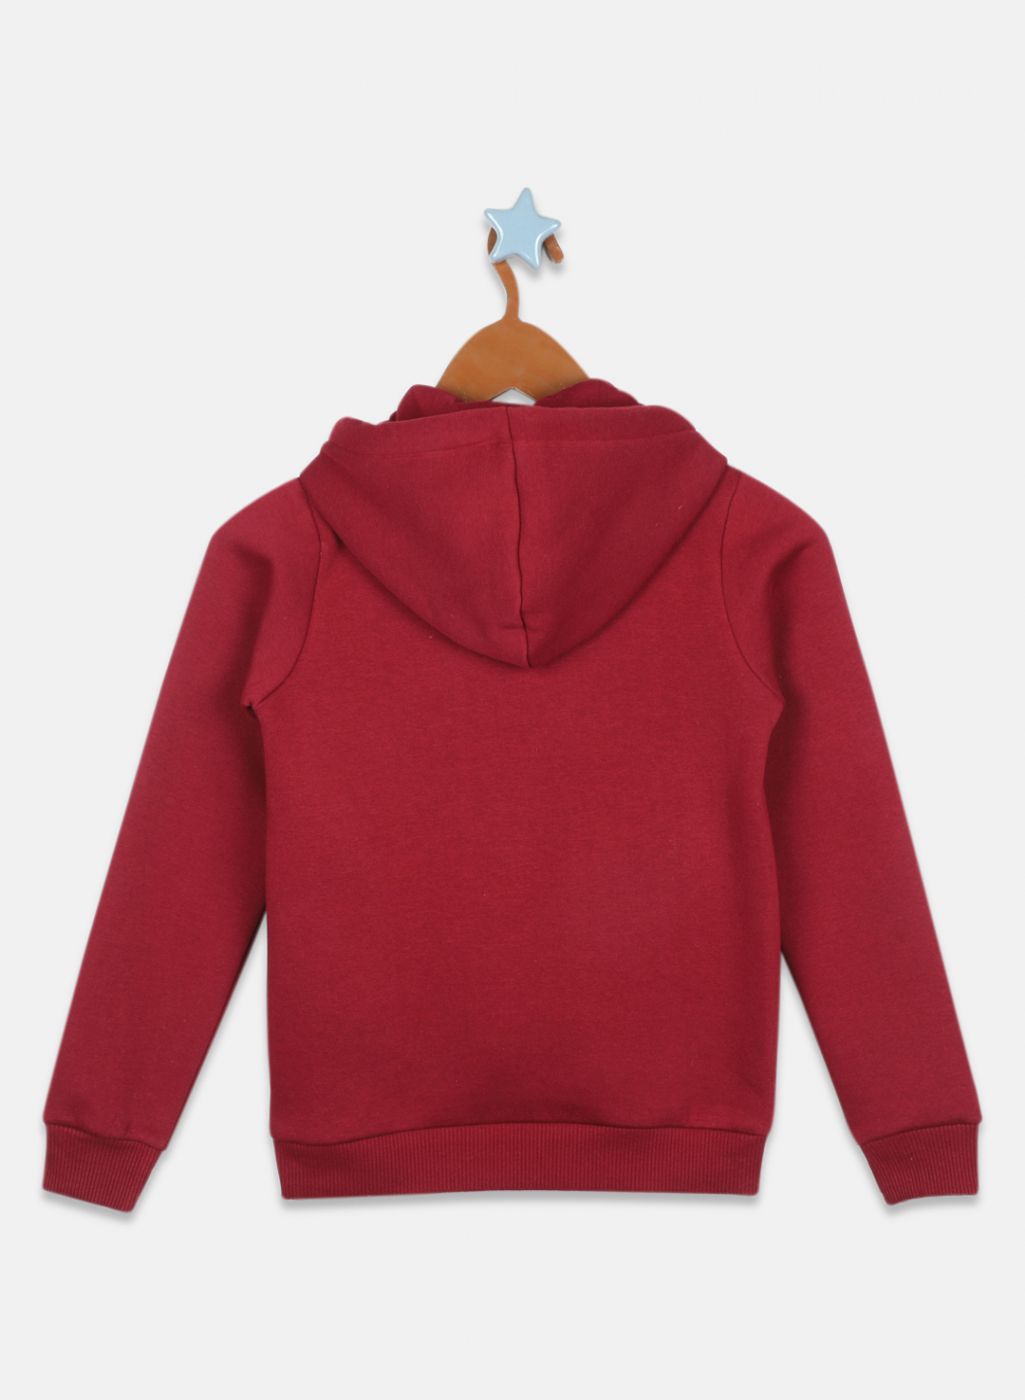 Girls Maroon Embroidered Sweatshirt